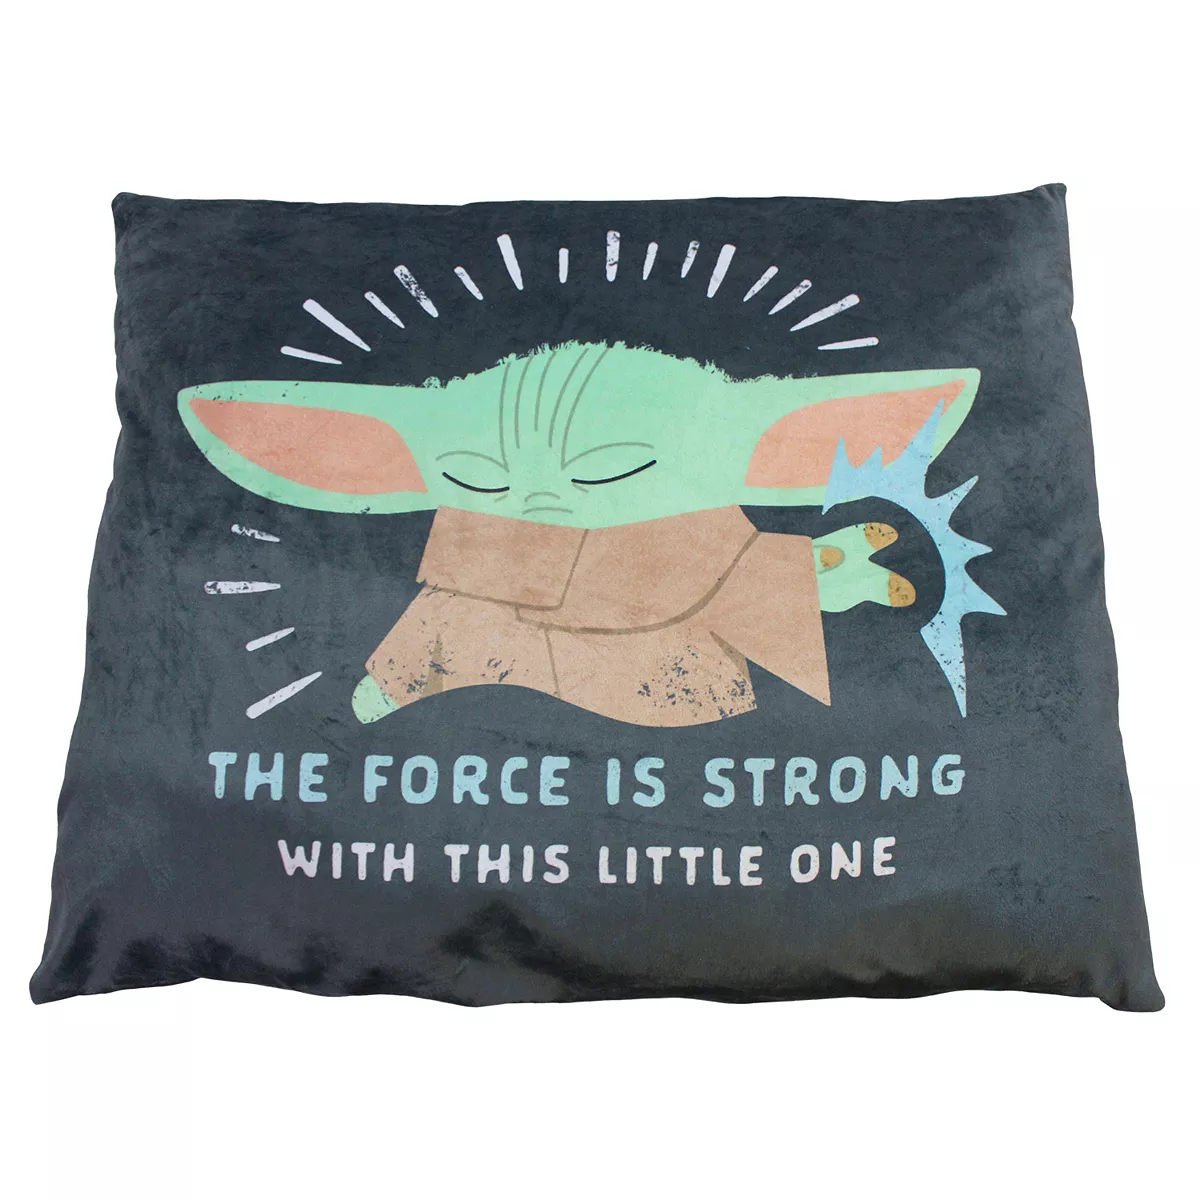 NEW Star Wars Mandalorian The Child Baby Yoda Pet Dog Bed Pillow 24 x 20... - $21.95